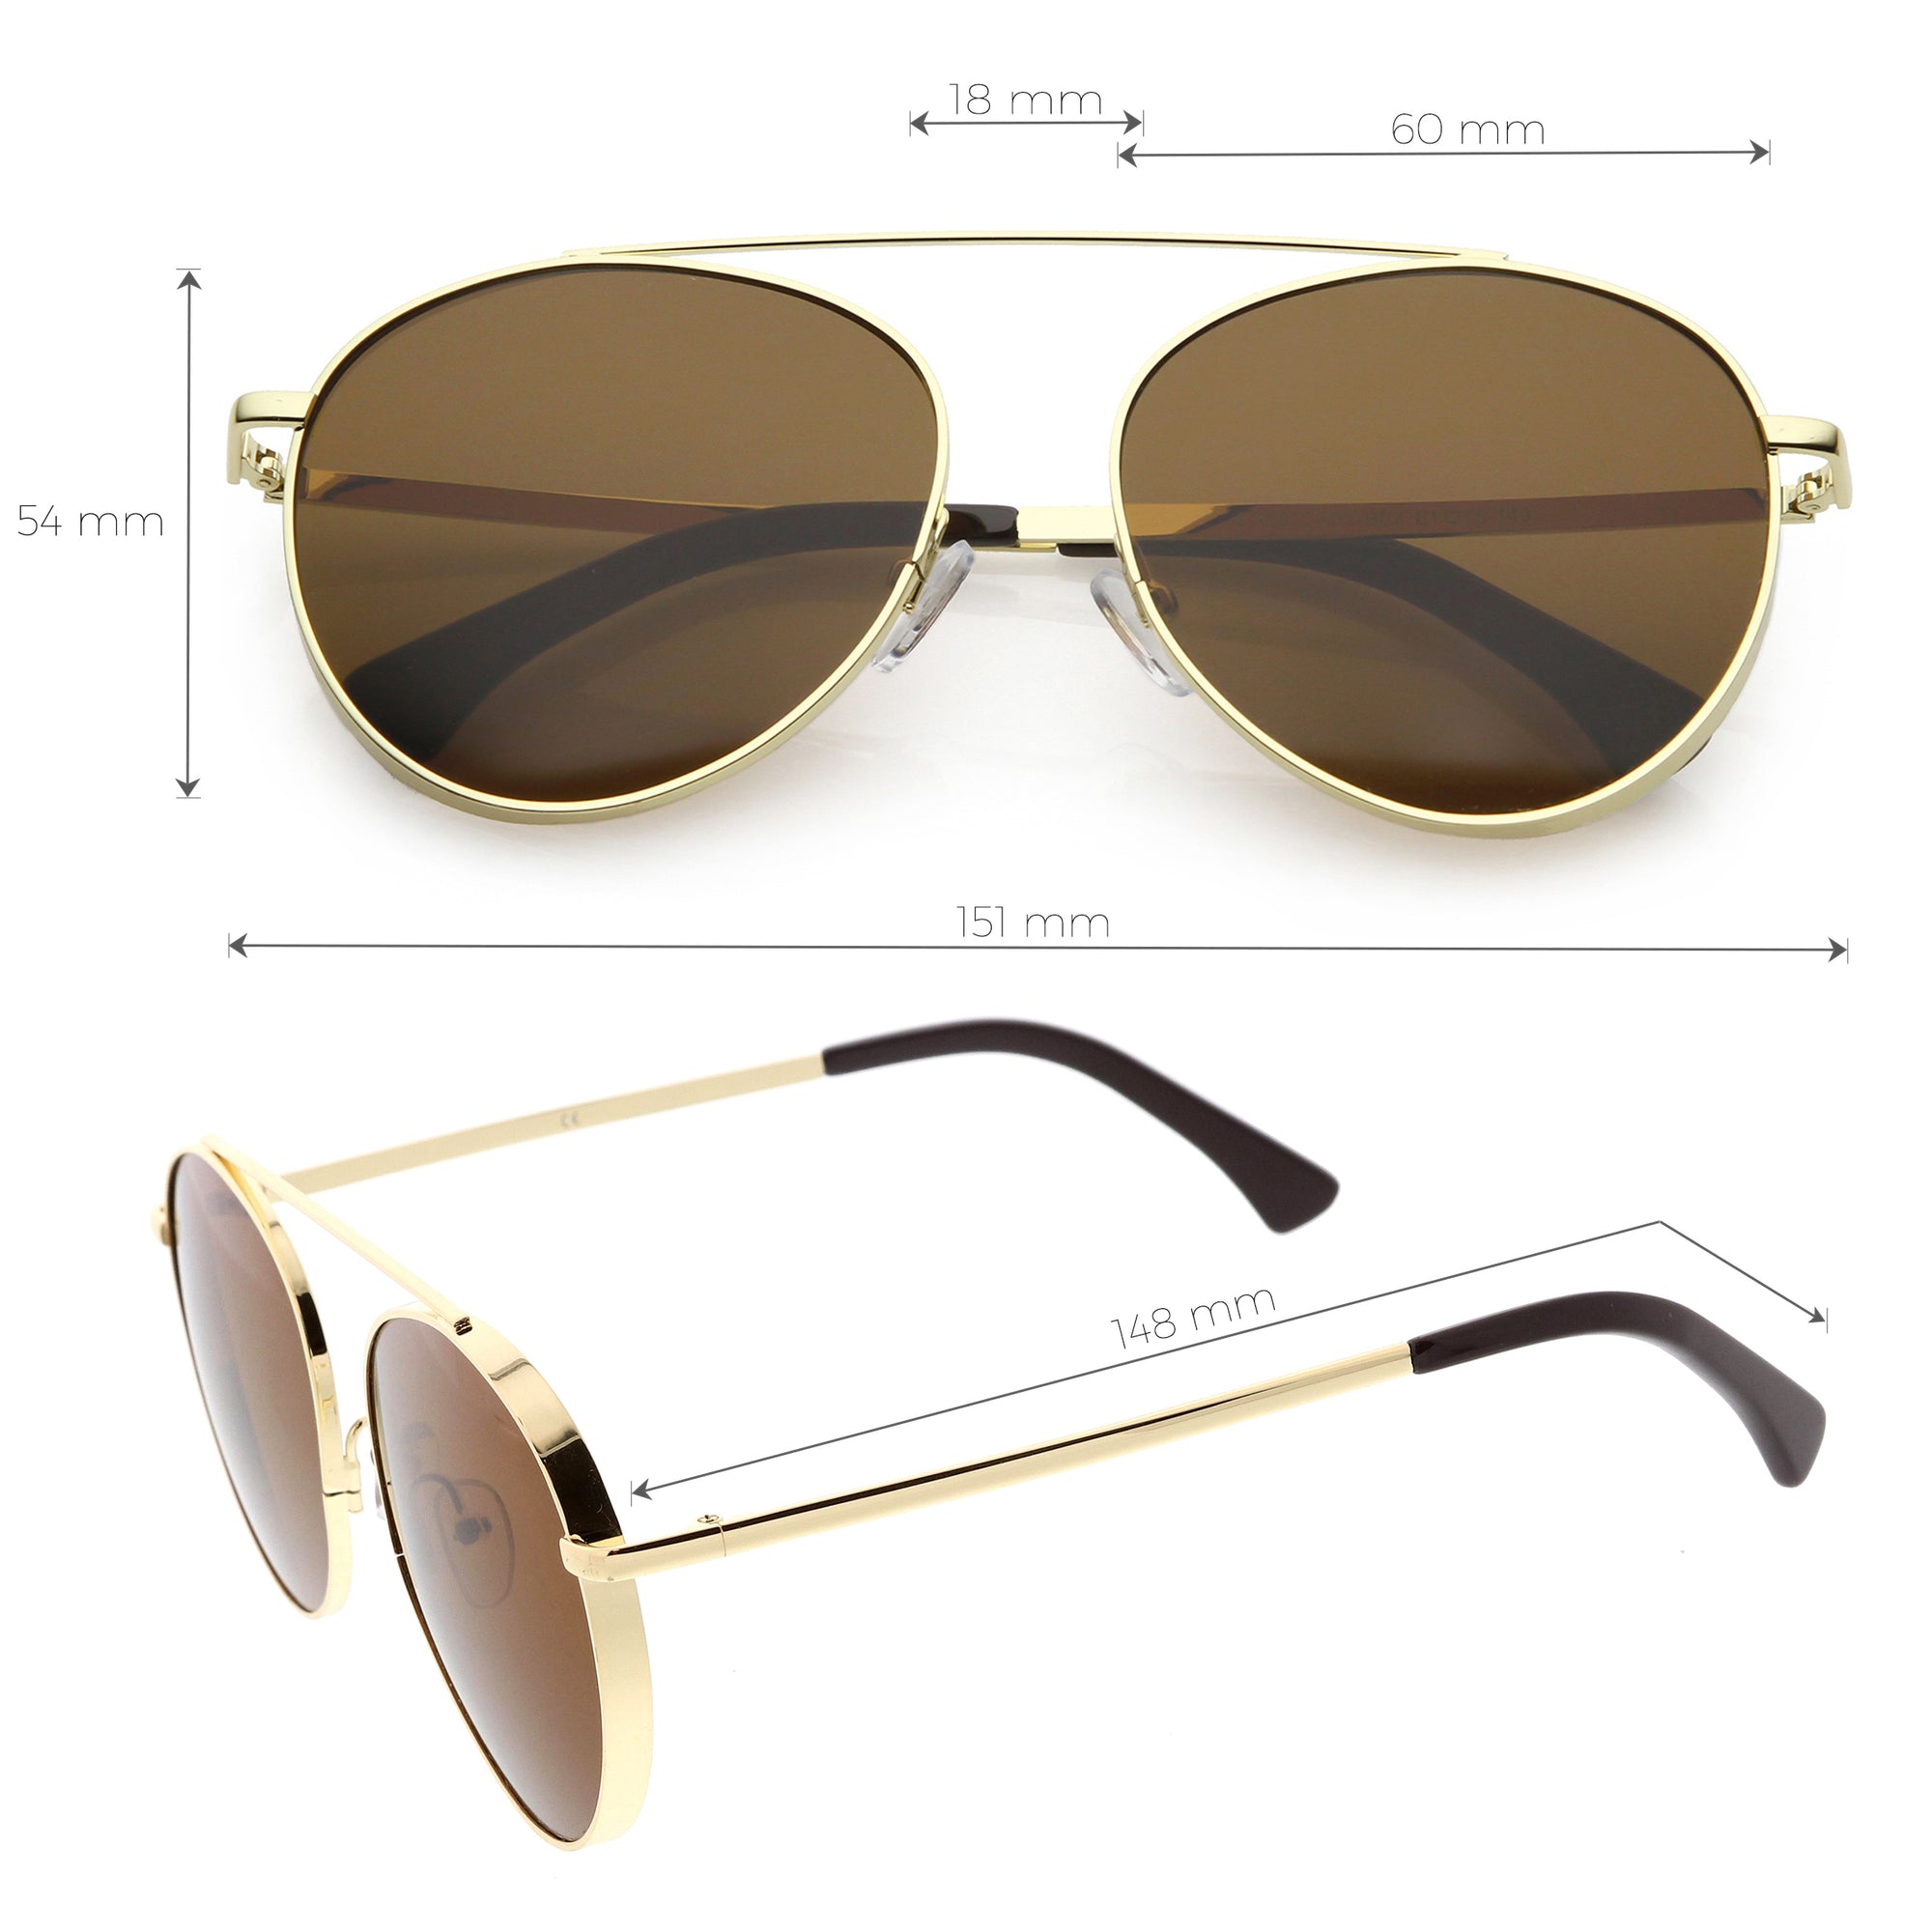 Small Rectangular Sunglasses for Men Women Metal Frame Modern Stylish -  Gold Metal Frame / Red Tinted Lens - CC18ST5U8IY